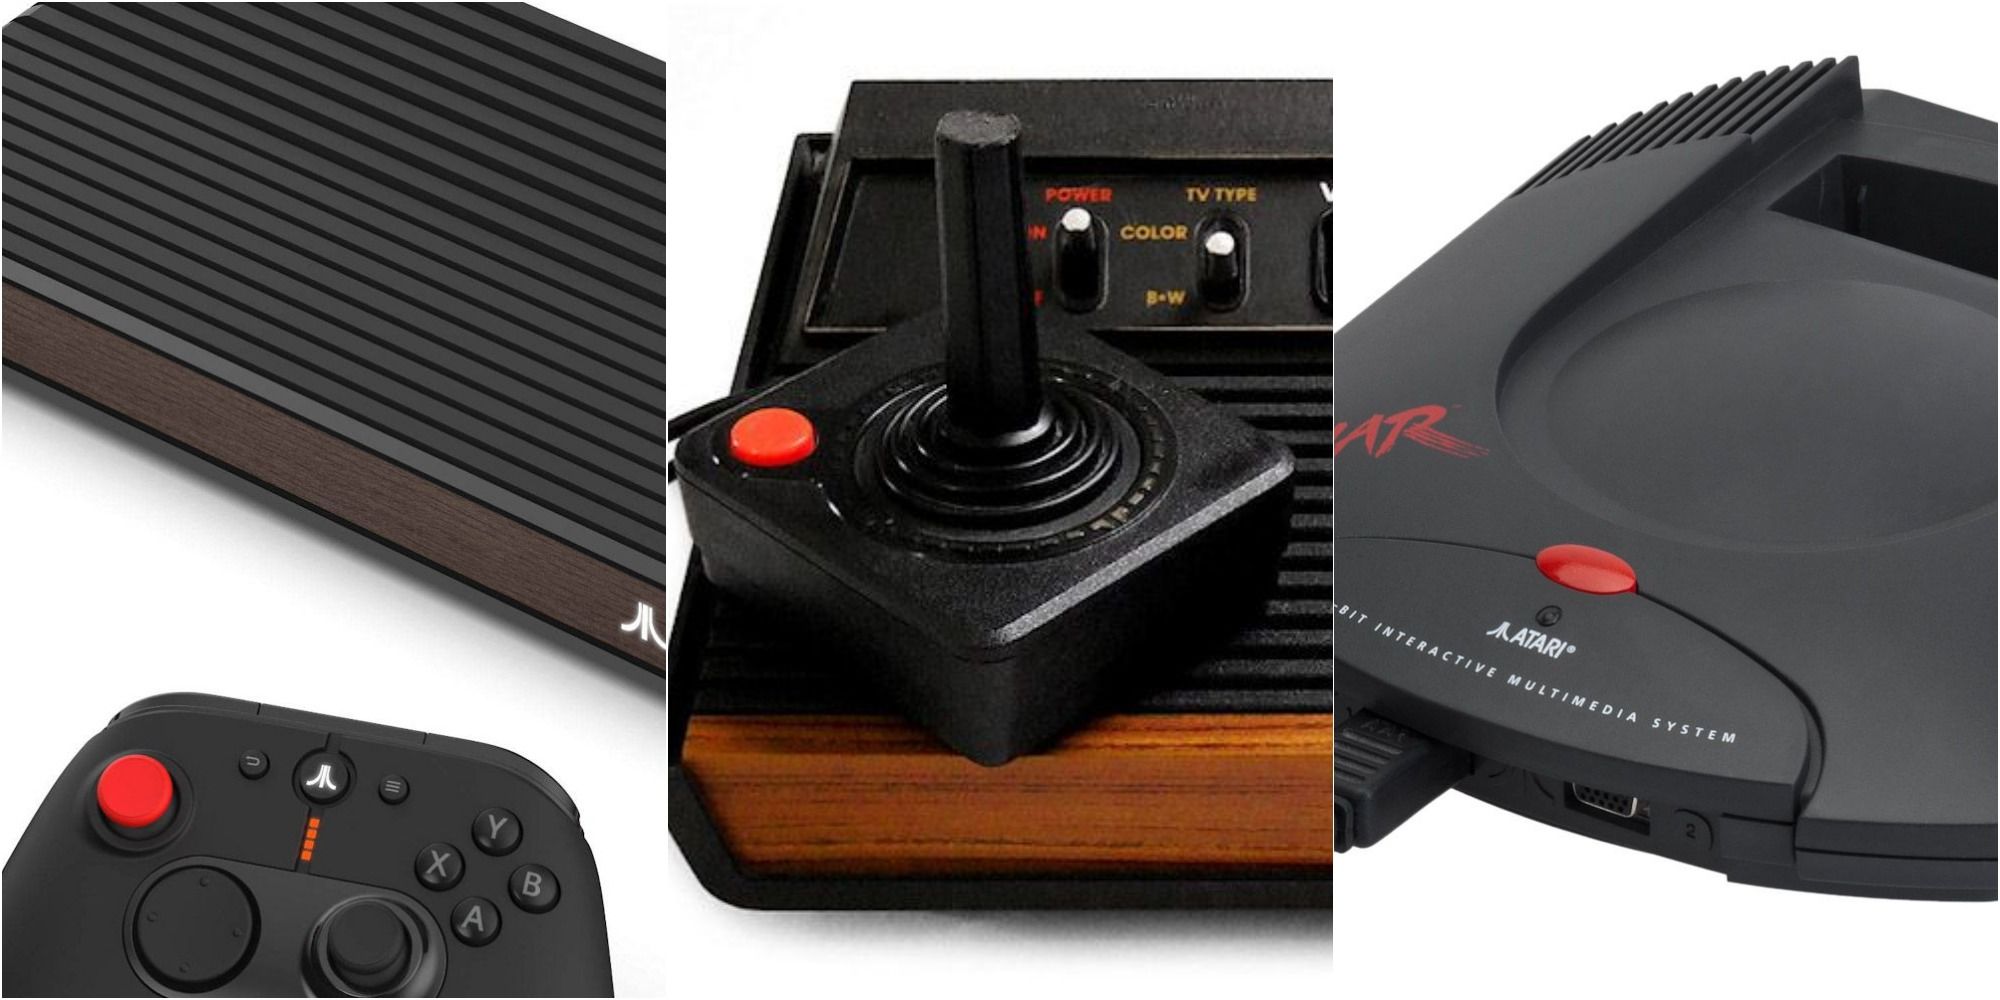 Every Atari Console Ranked